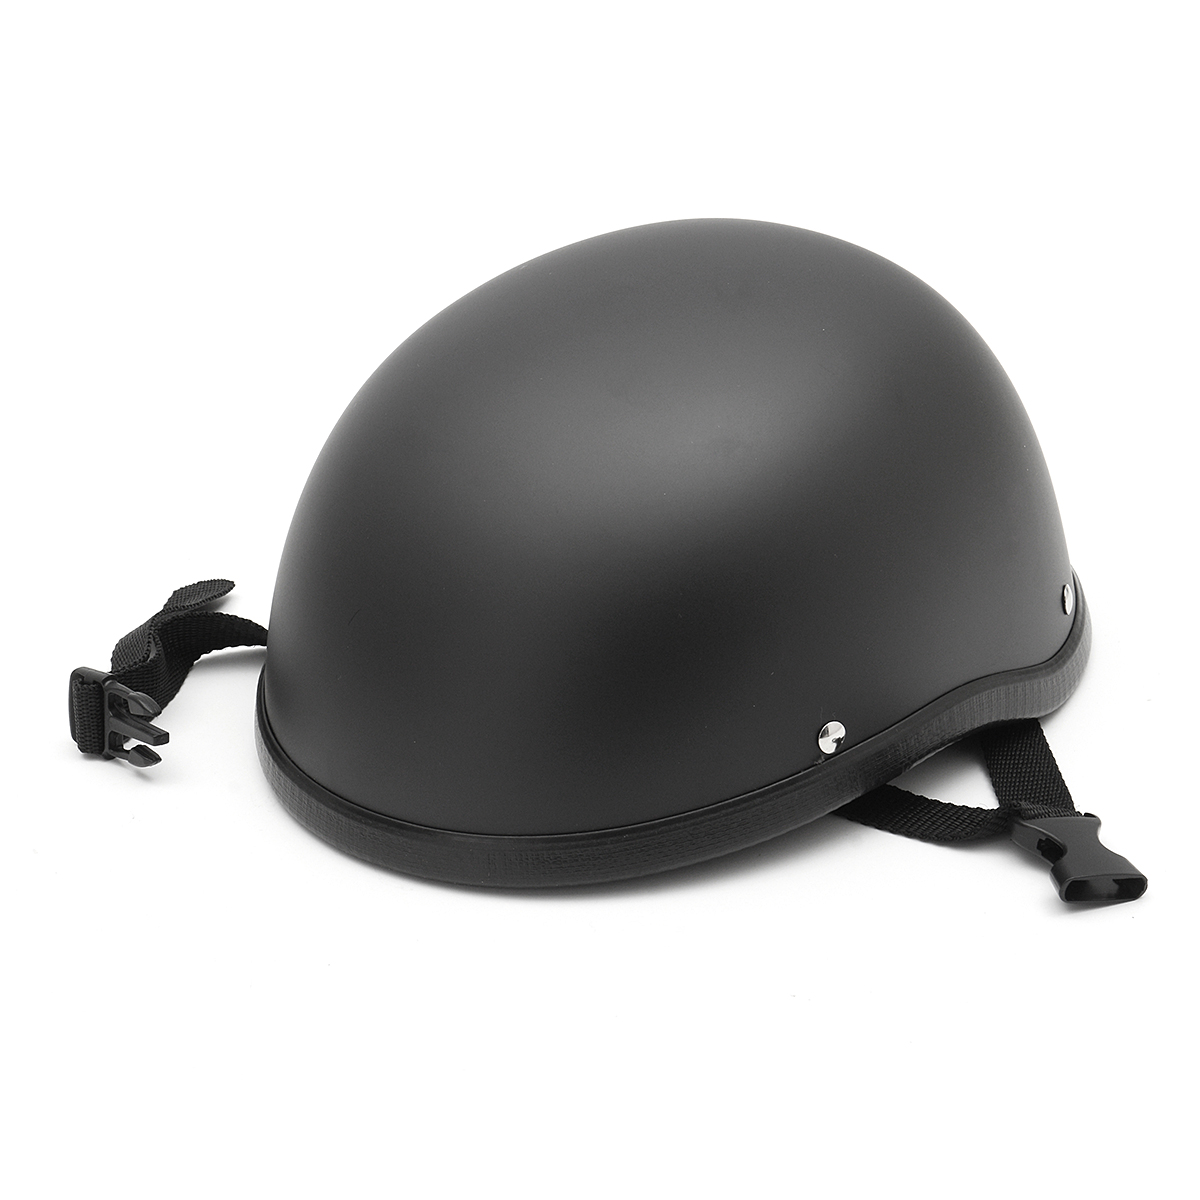 Купить шлем каску. Шлем-каска Braincap. Мотошлем Braincap 1/2. A_1 мотошлем Braincap Awina TN-8679 черный. Braincap Black.